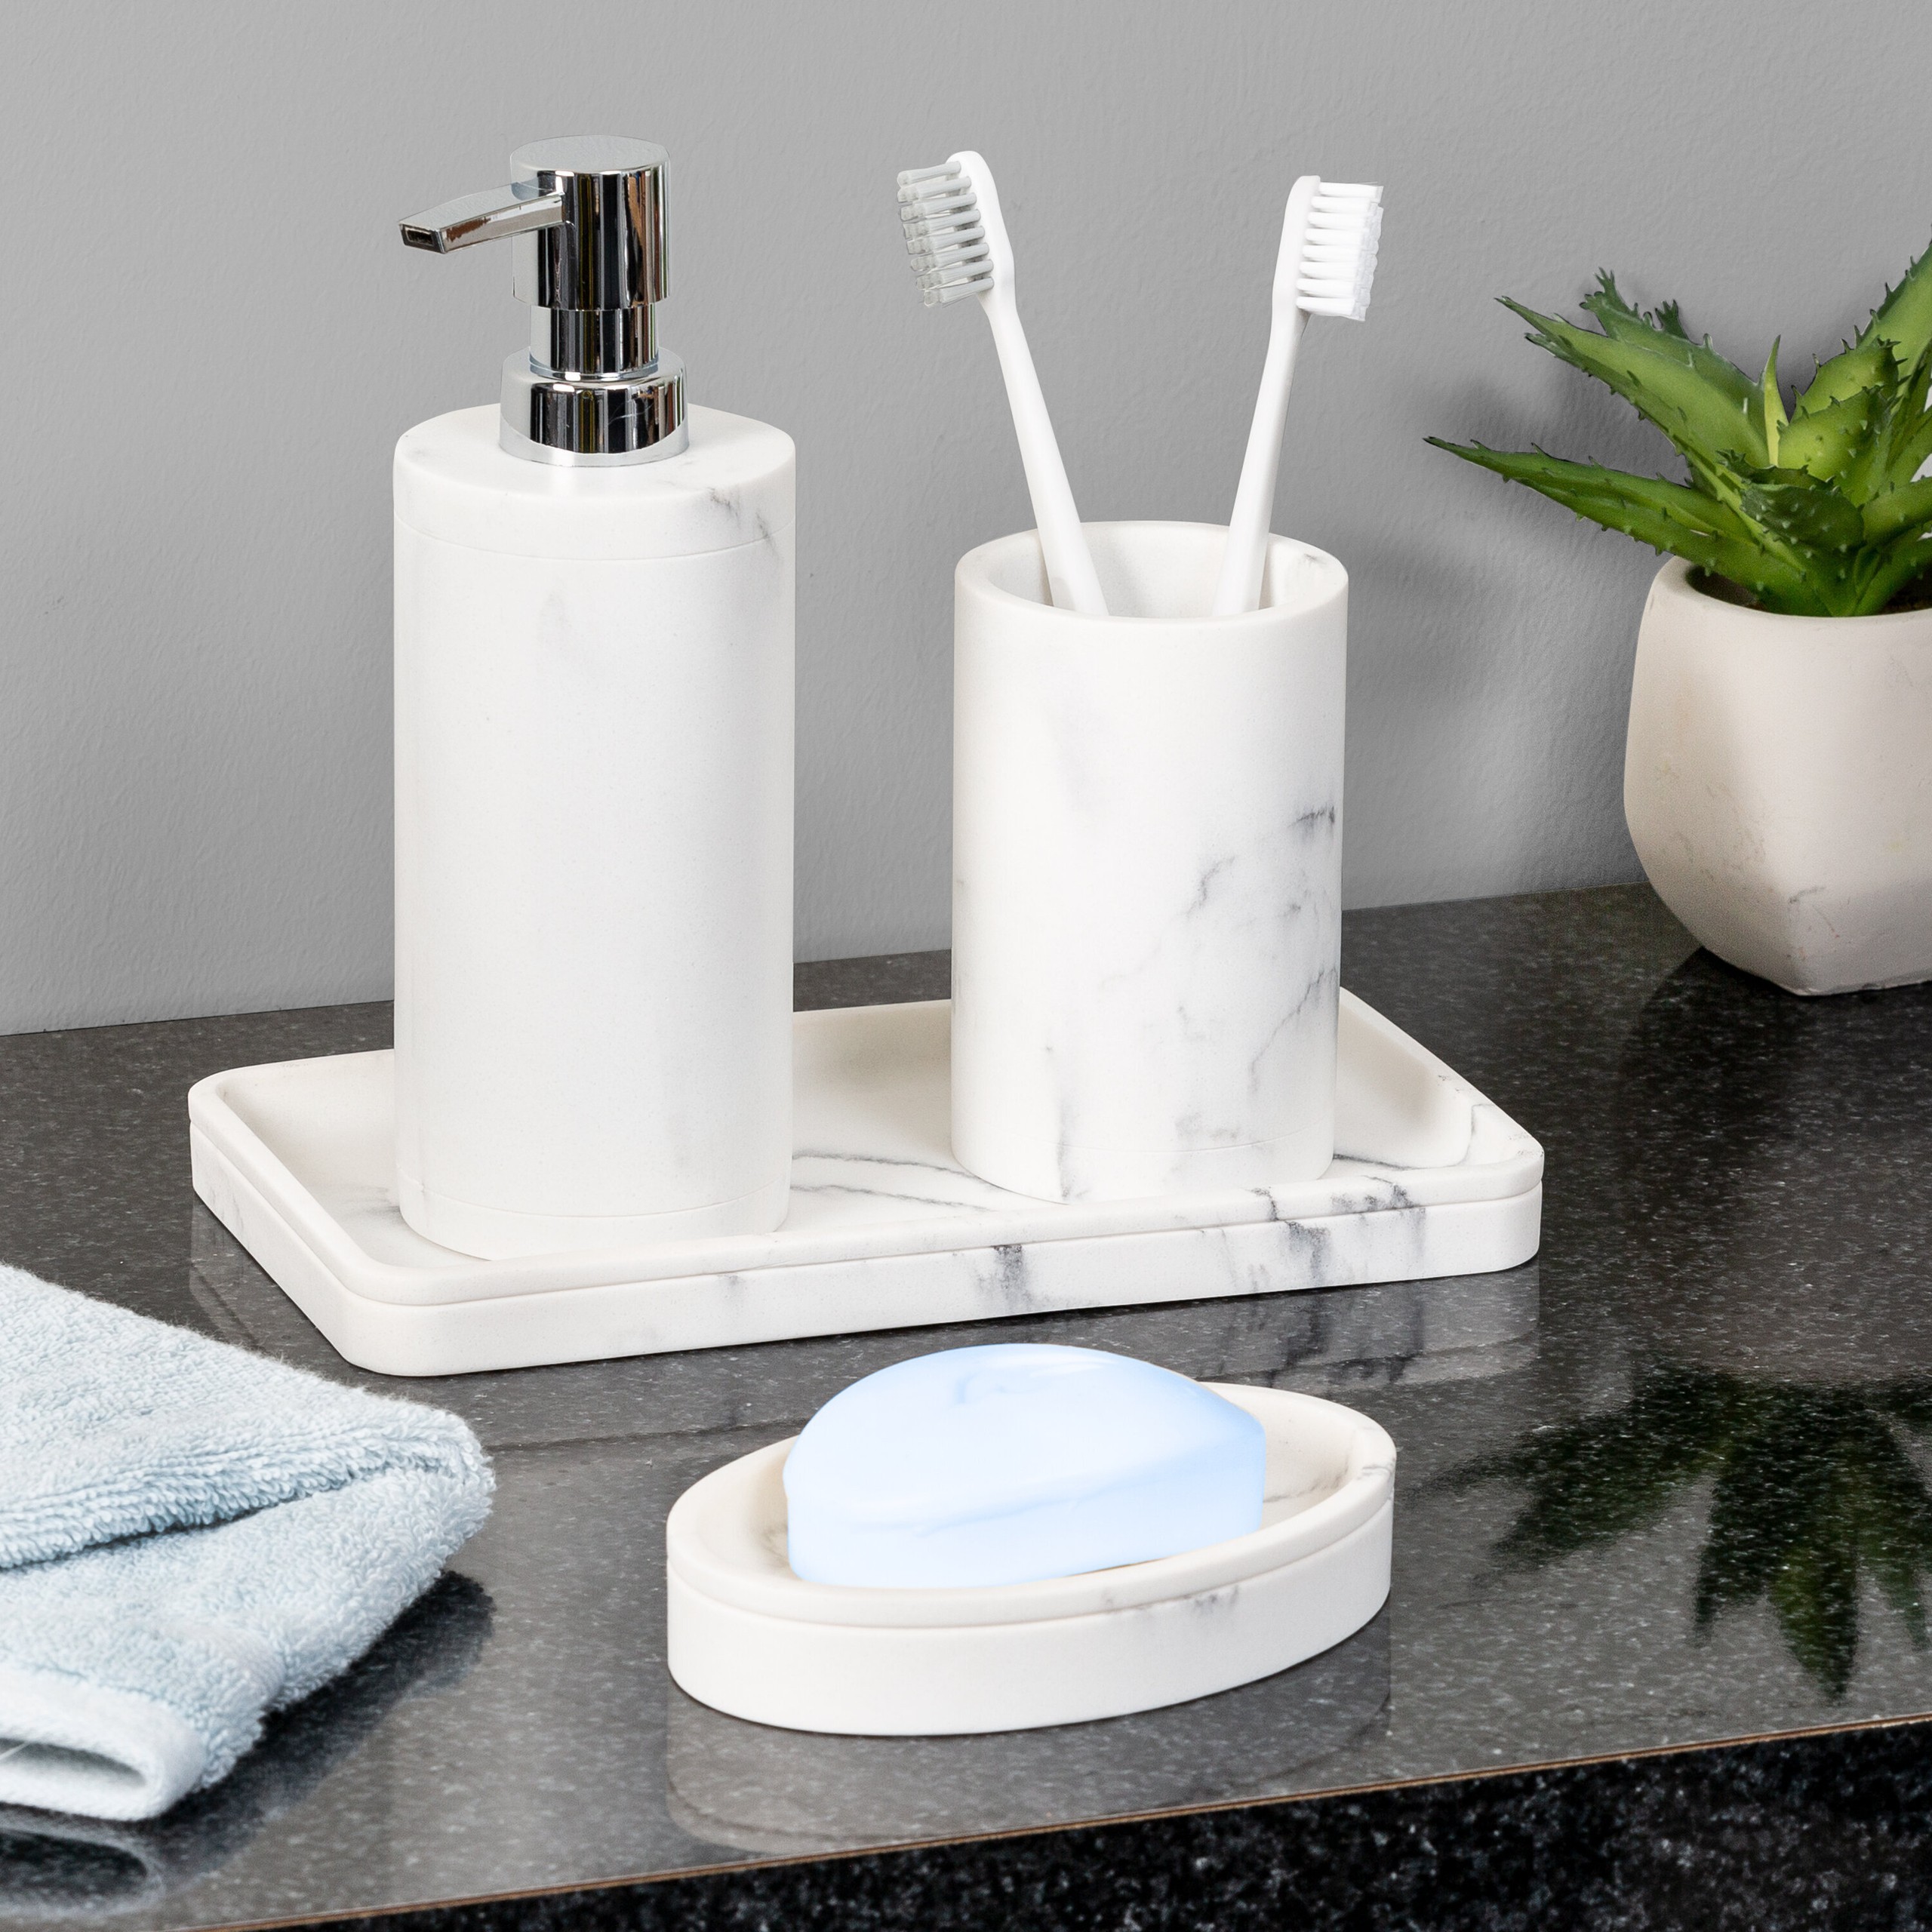 Wood Bathroom Accessories Set, Wooden Soap Dispenser, Toothbrush Holder, Soap  Dish 